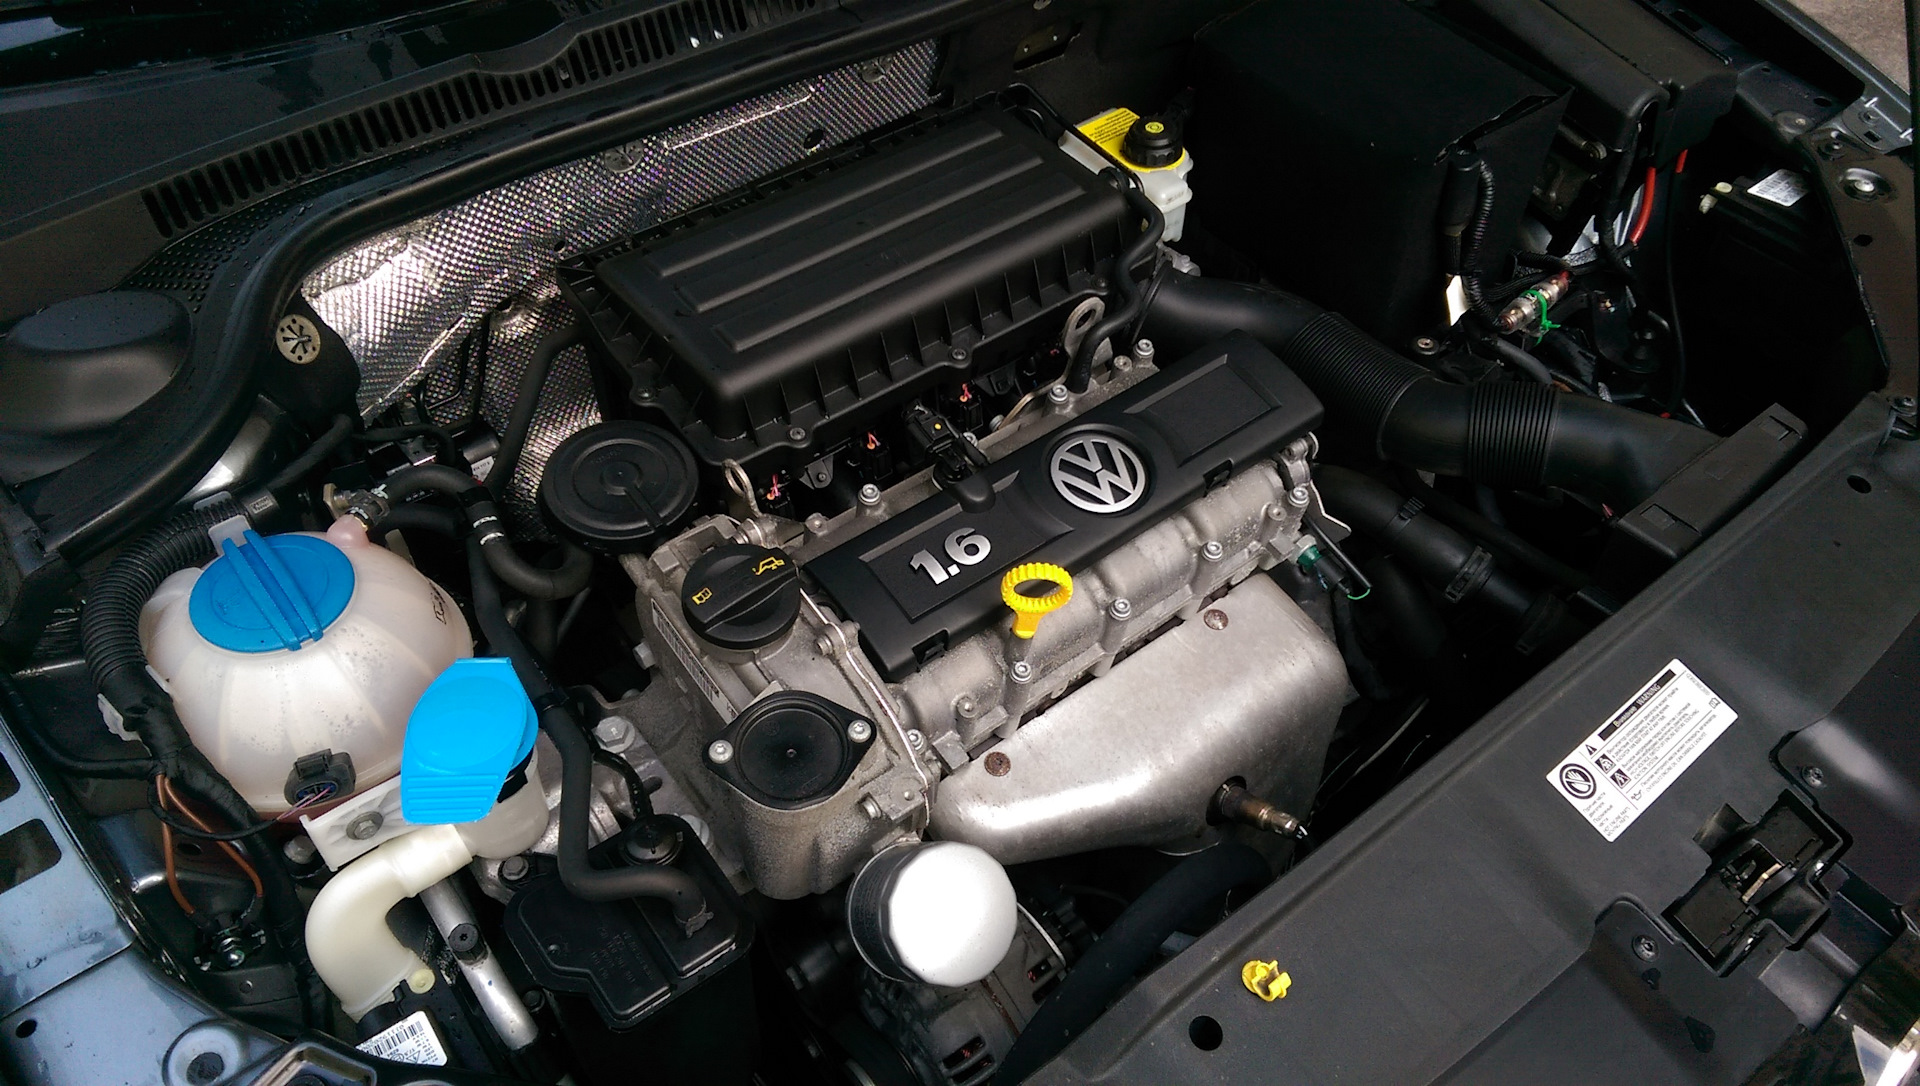 Volkswagen jetta какой двигатель. Фольксваген Джетта 6 1.6 автомат двигатель. 1.6 Двигатель Фольксваген Джетта 2013. Двигатель Volkswagen Jetta b 6. Фольксваген Джетта 2014 двигатель 1.6 автомат.